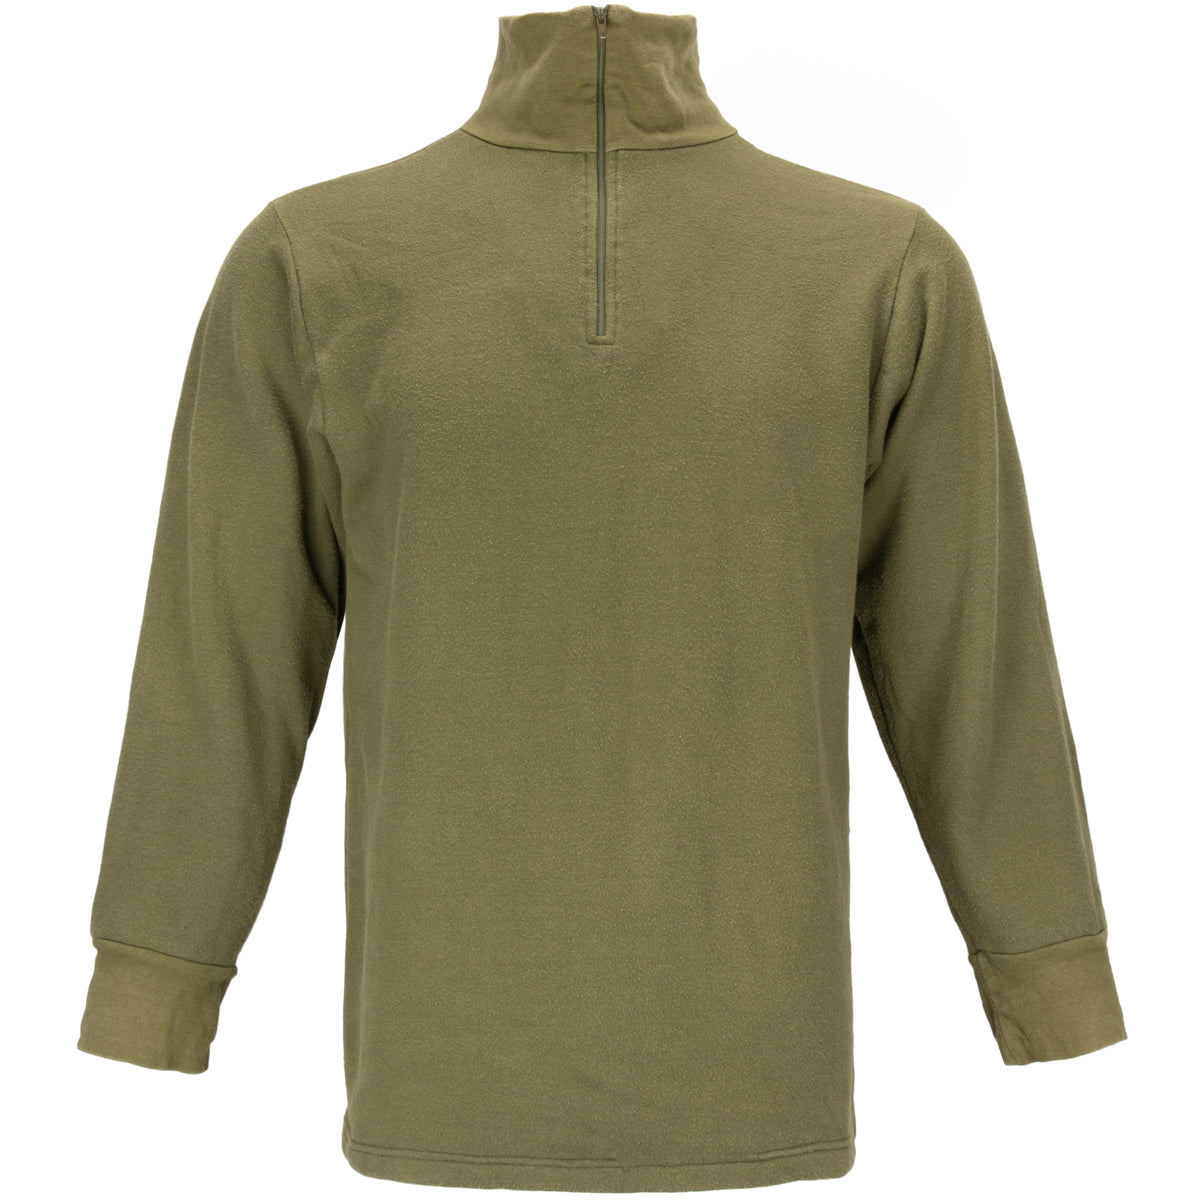 Dutch Army 1/4 Zip Long Sleeve Shirt | Tan